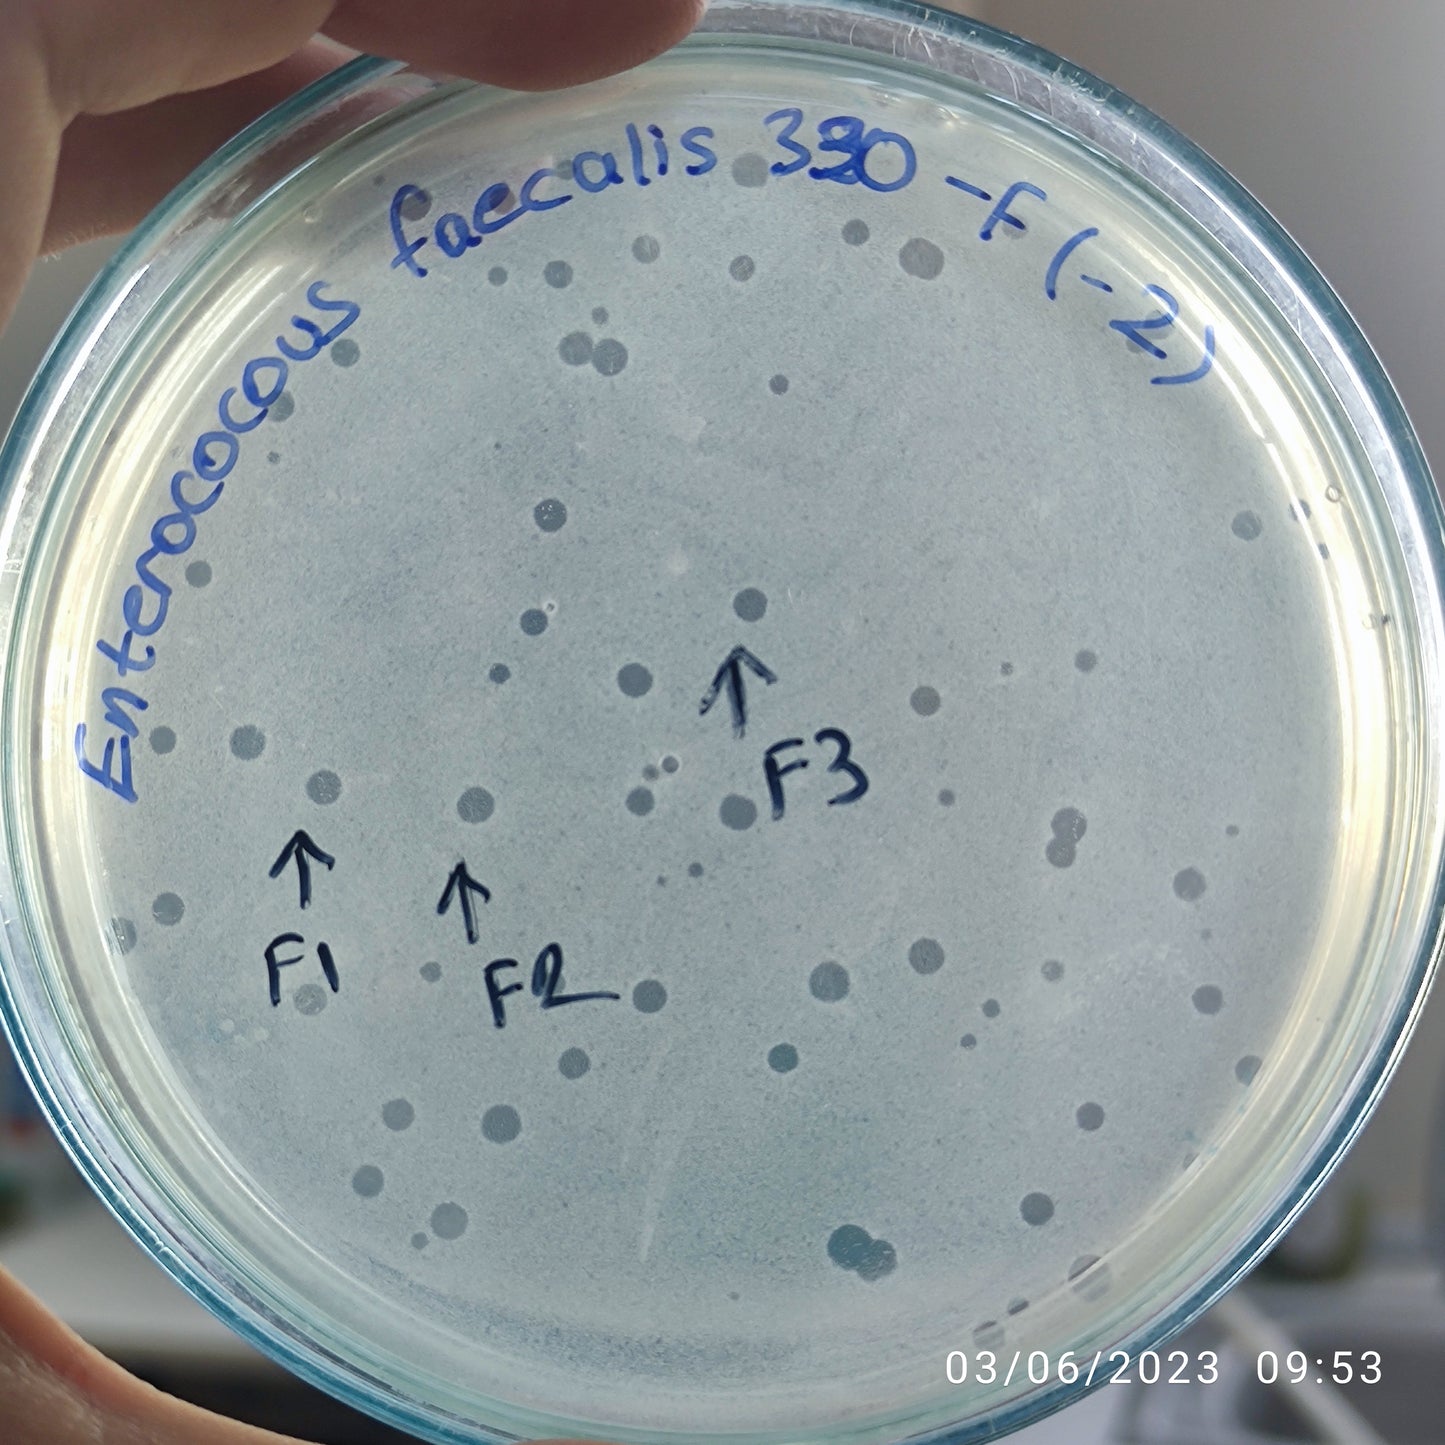 Enterococcus faecalis bacteriophage 110390F